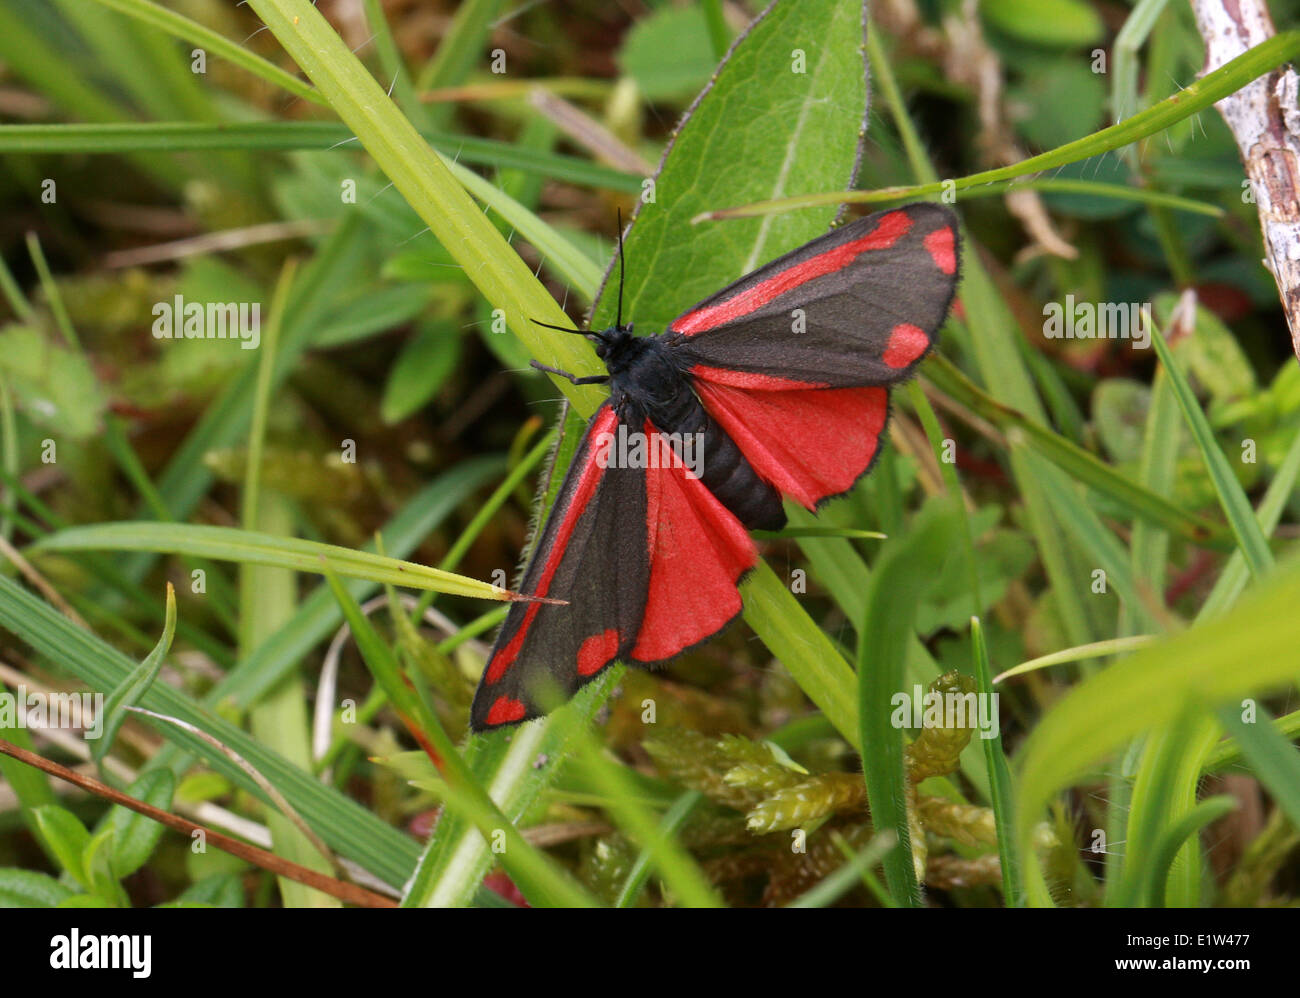 Cinnabar Moth, Tyria jacobaeae, Arctiidae. A Day Flying Moth. Stock Photo